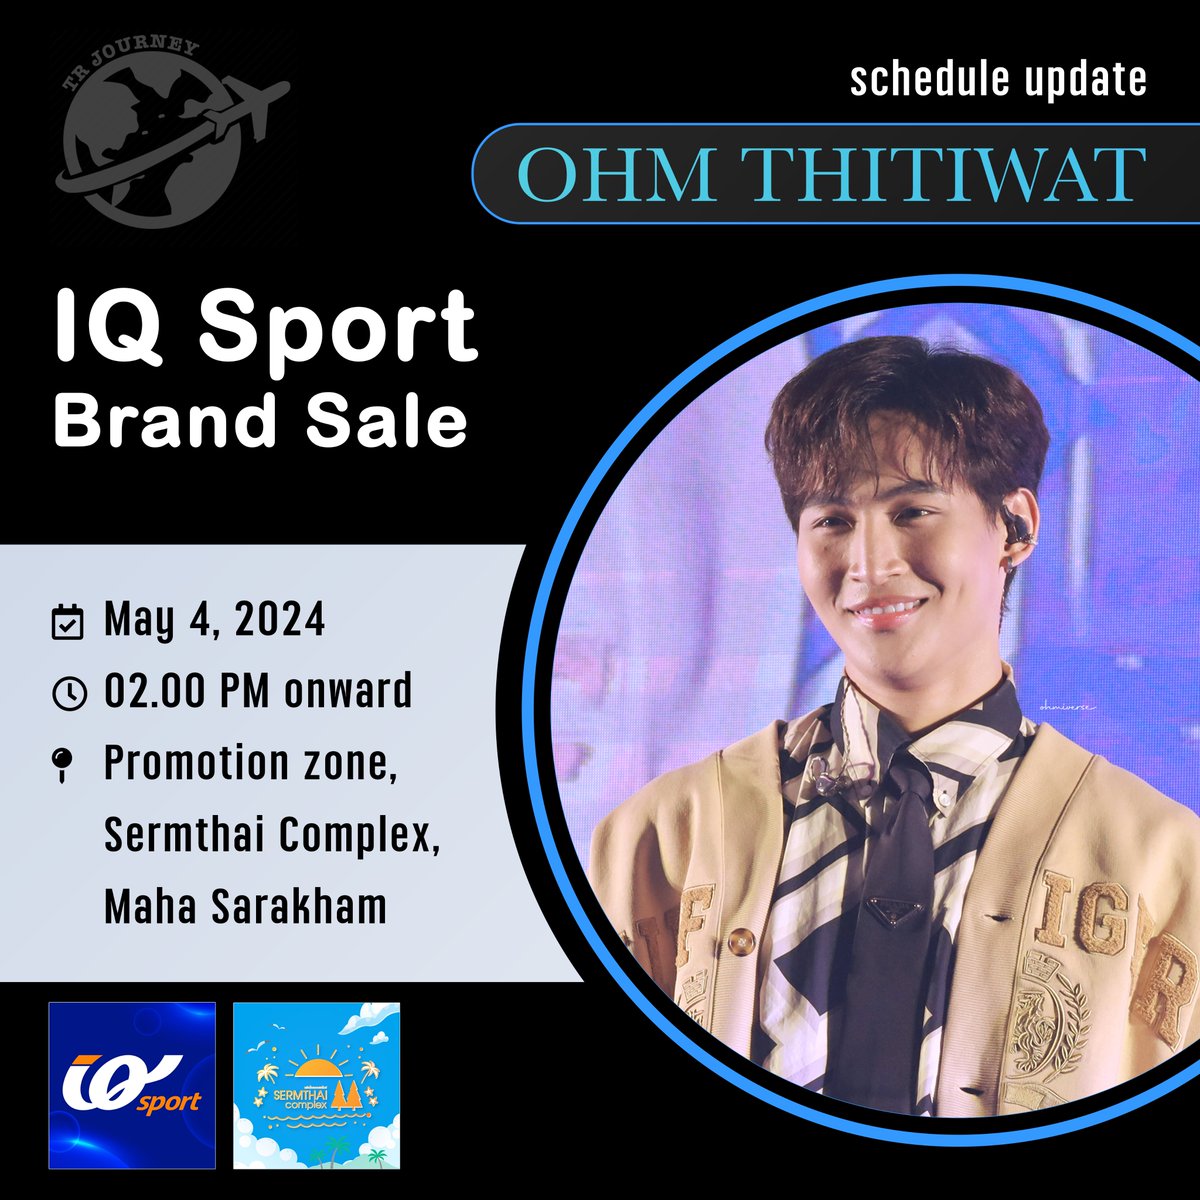 ⭐️ IQ Sport Brand Sale👟 📌 #OhmThitiwatSchedule 🗓️ Saturday, May 4, 2024 🕑 from 02.00 PM onward 📍 Promotion zone, 1st floor, Sermthai Complex, Maha Sarakham 🗺️ maps.app.goo.gl/9KgCShHonPMo26… #OhmThitiwat #โอห์มไง #TRJourney #IQsport #NewsinfinityEntertainment